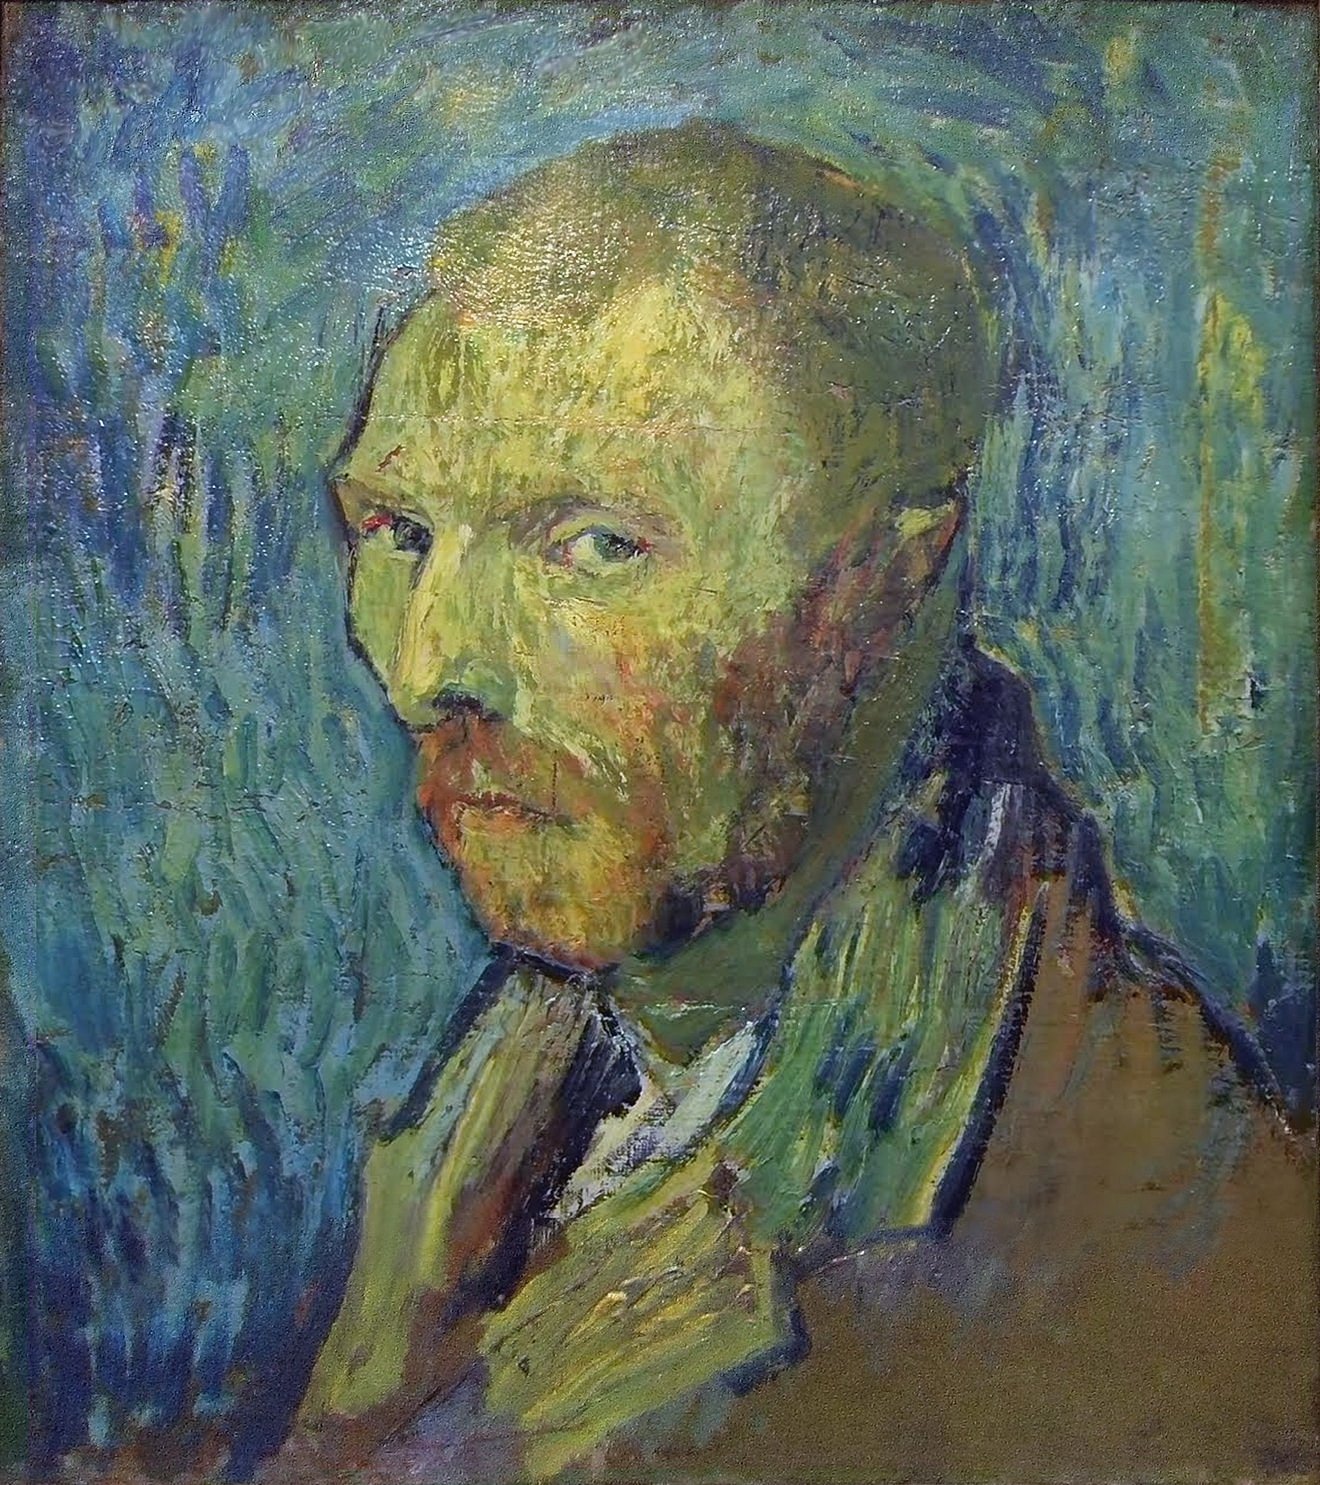 Self Portrait, 1889